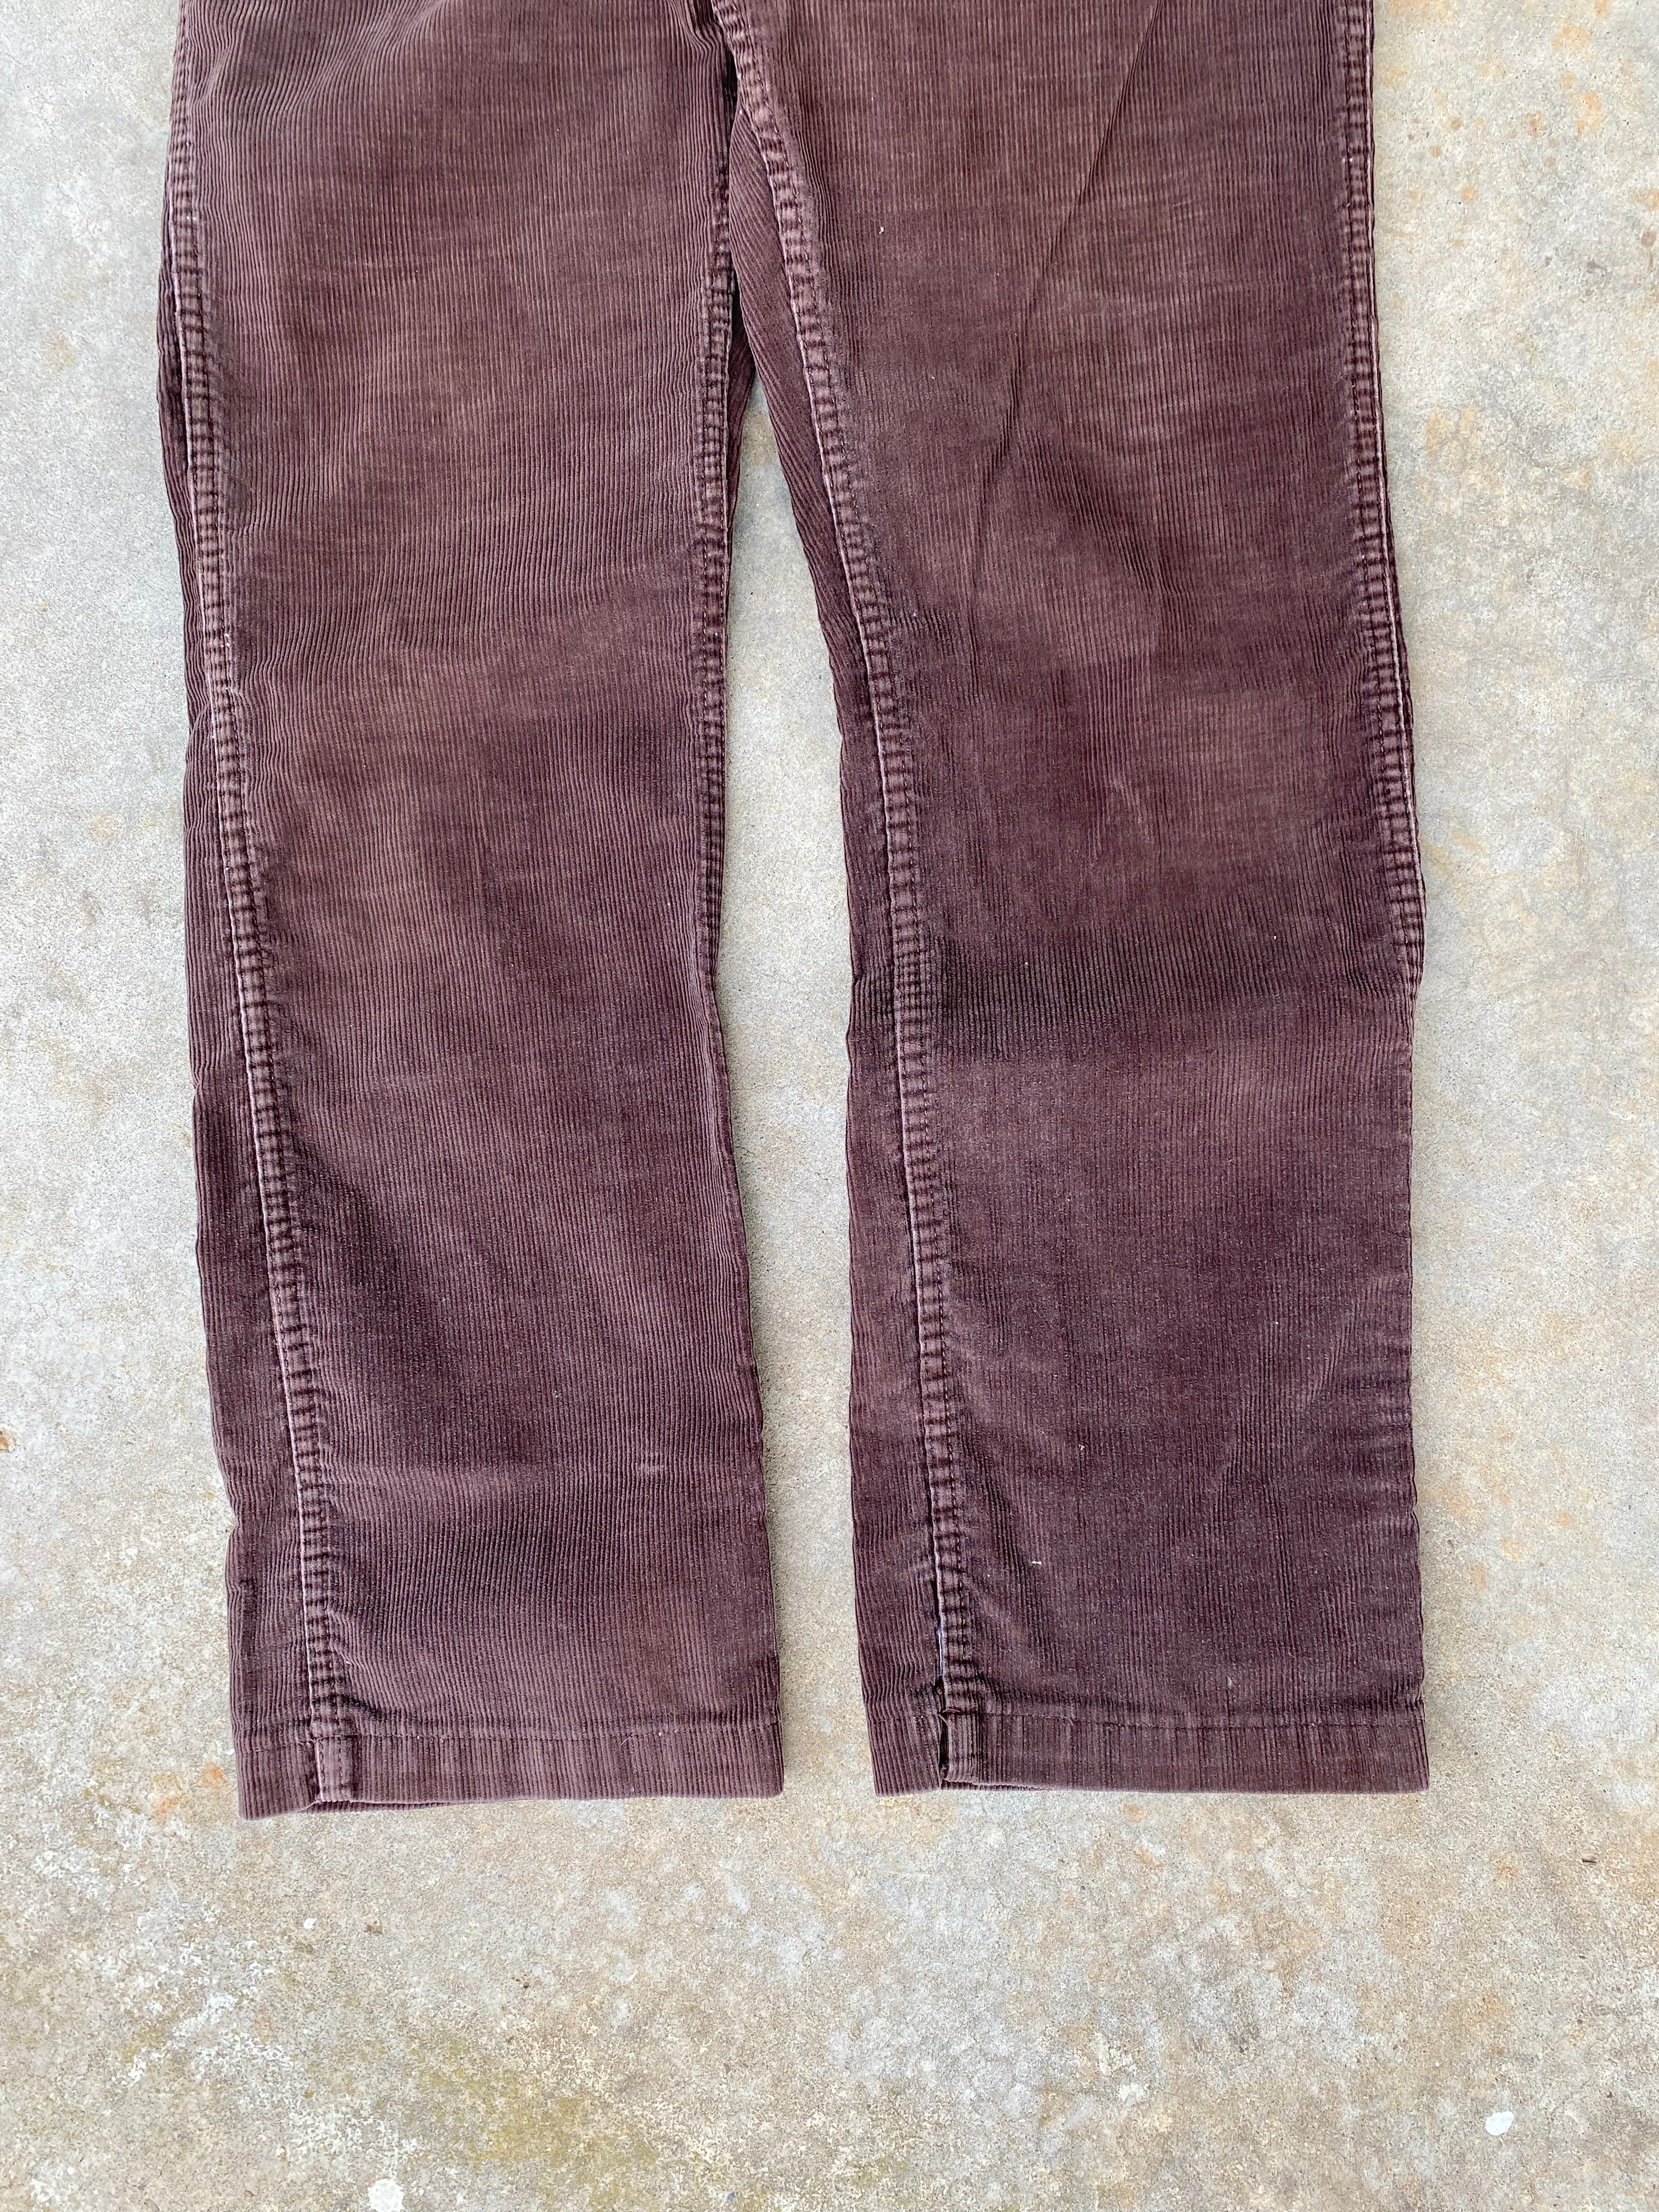 Vintage Lee Frisko Corduroy Pants (34"x30.5")